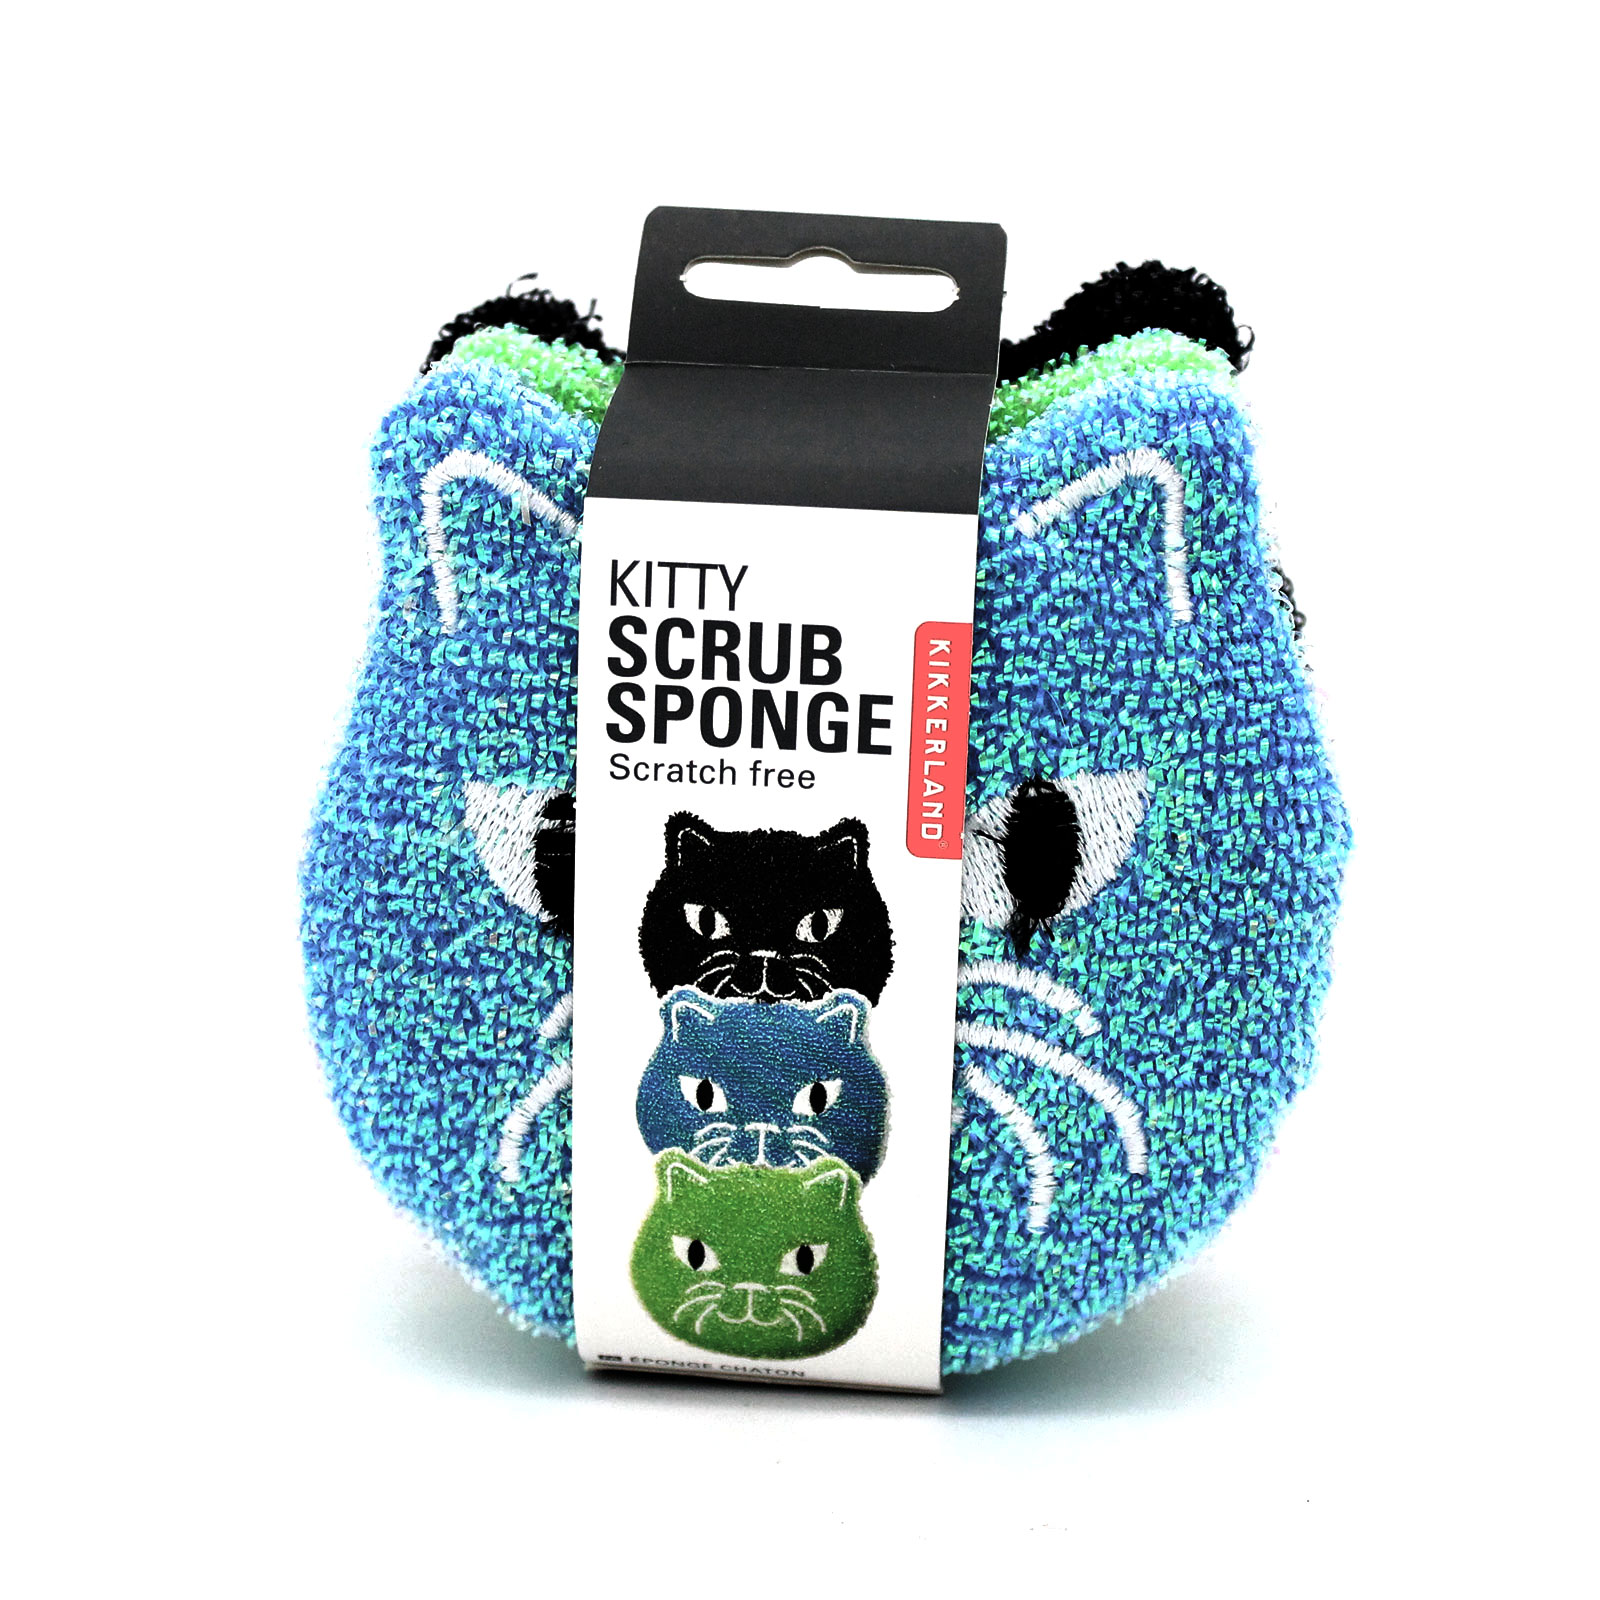 https://www.catskillmtncountrystore.com/wp-content/uploads/2021/02/kitty-scrub-sponge-IMG_9088.jpg